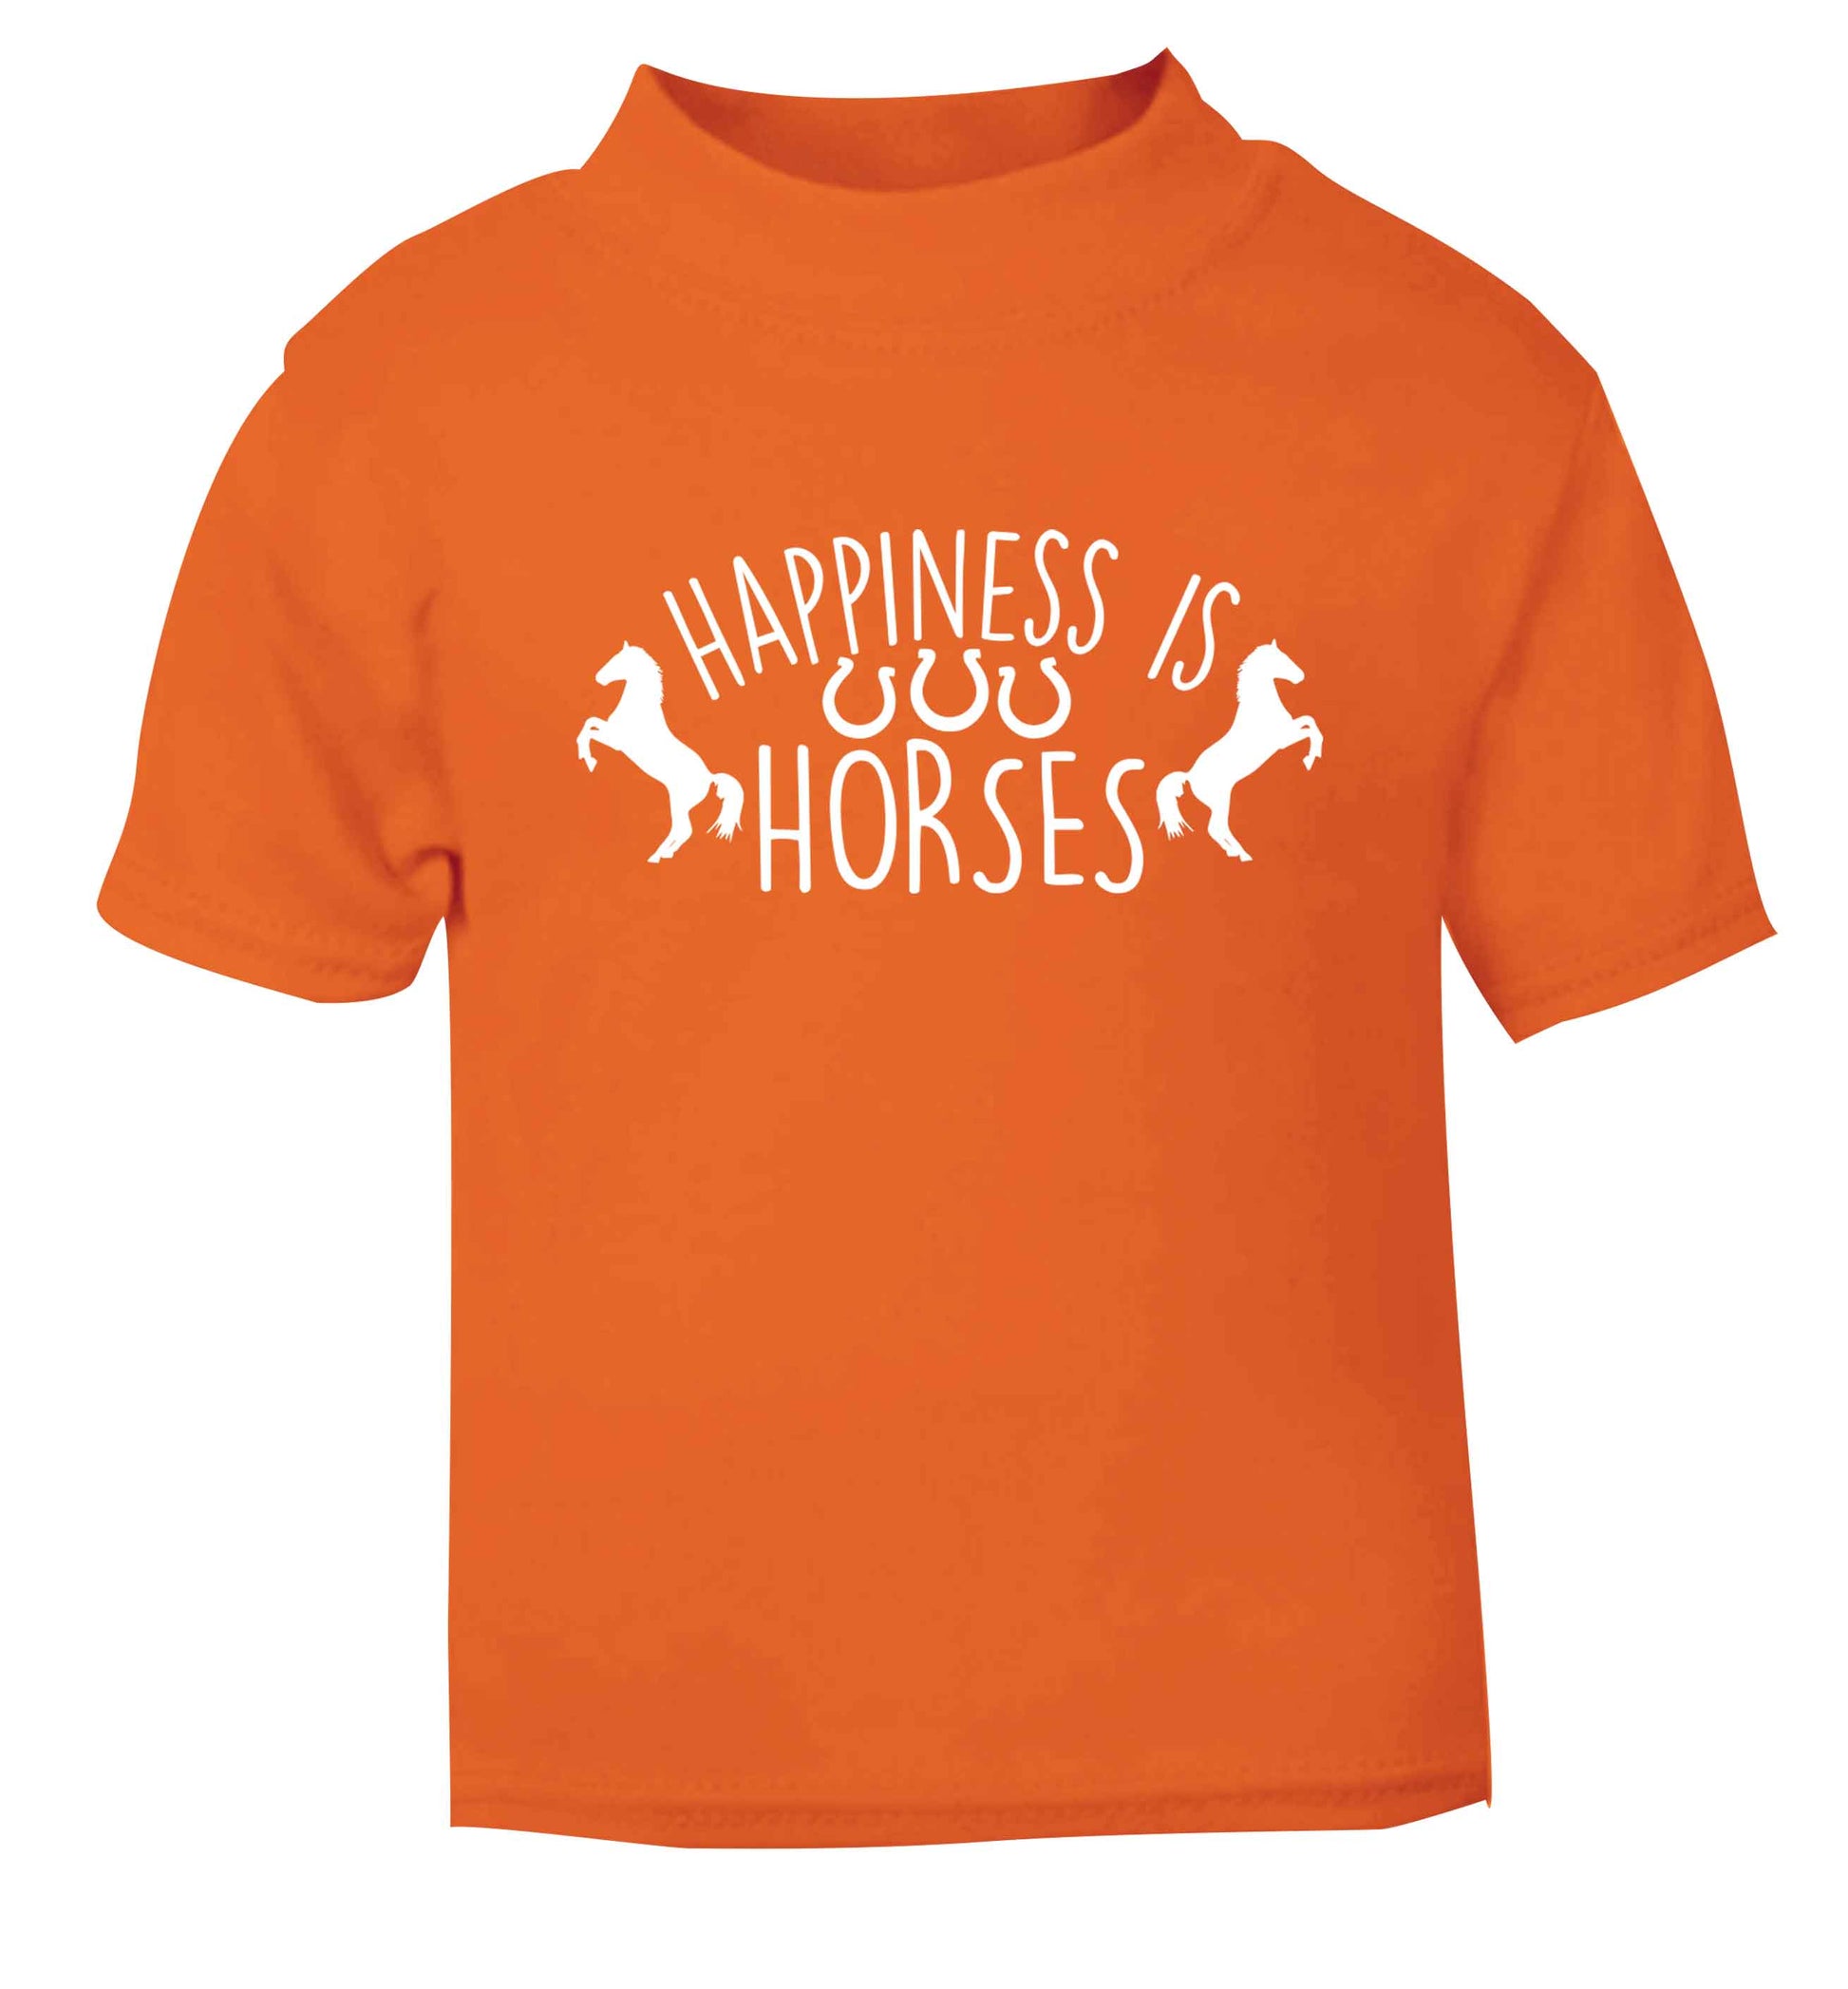 Happiness is horses orange baby toddler Tshirt 2 Years